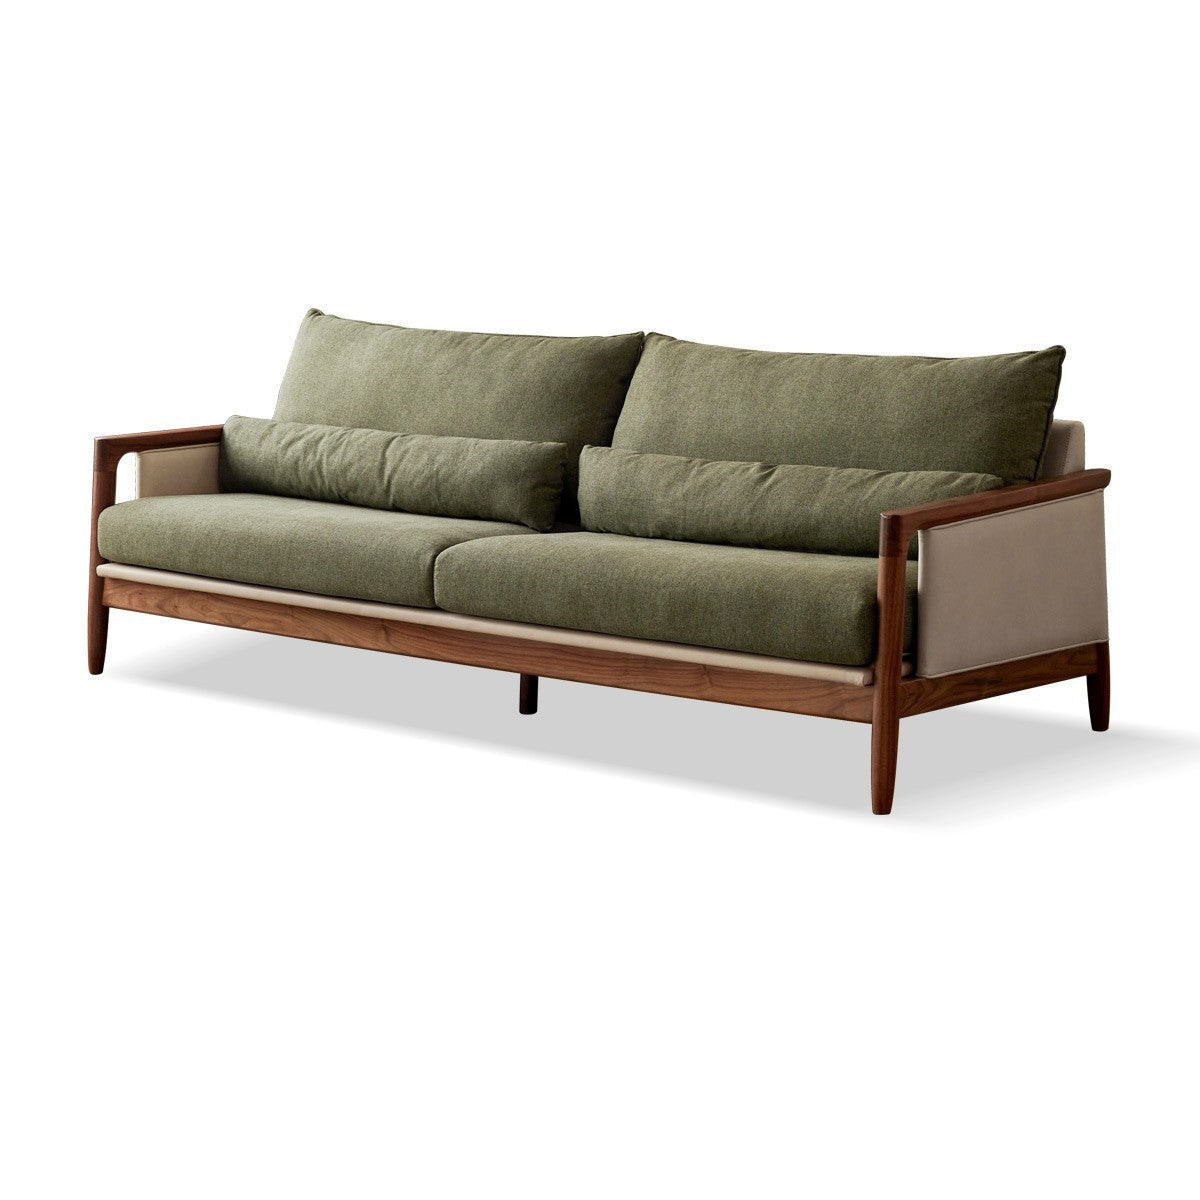 Black walnut solid wood Genuine leather sofa, retro fabric sofa"